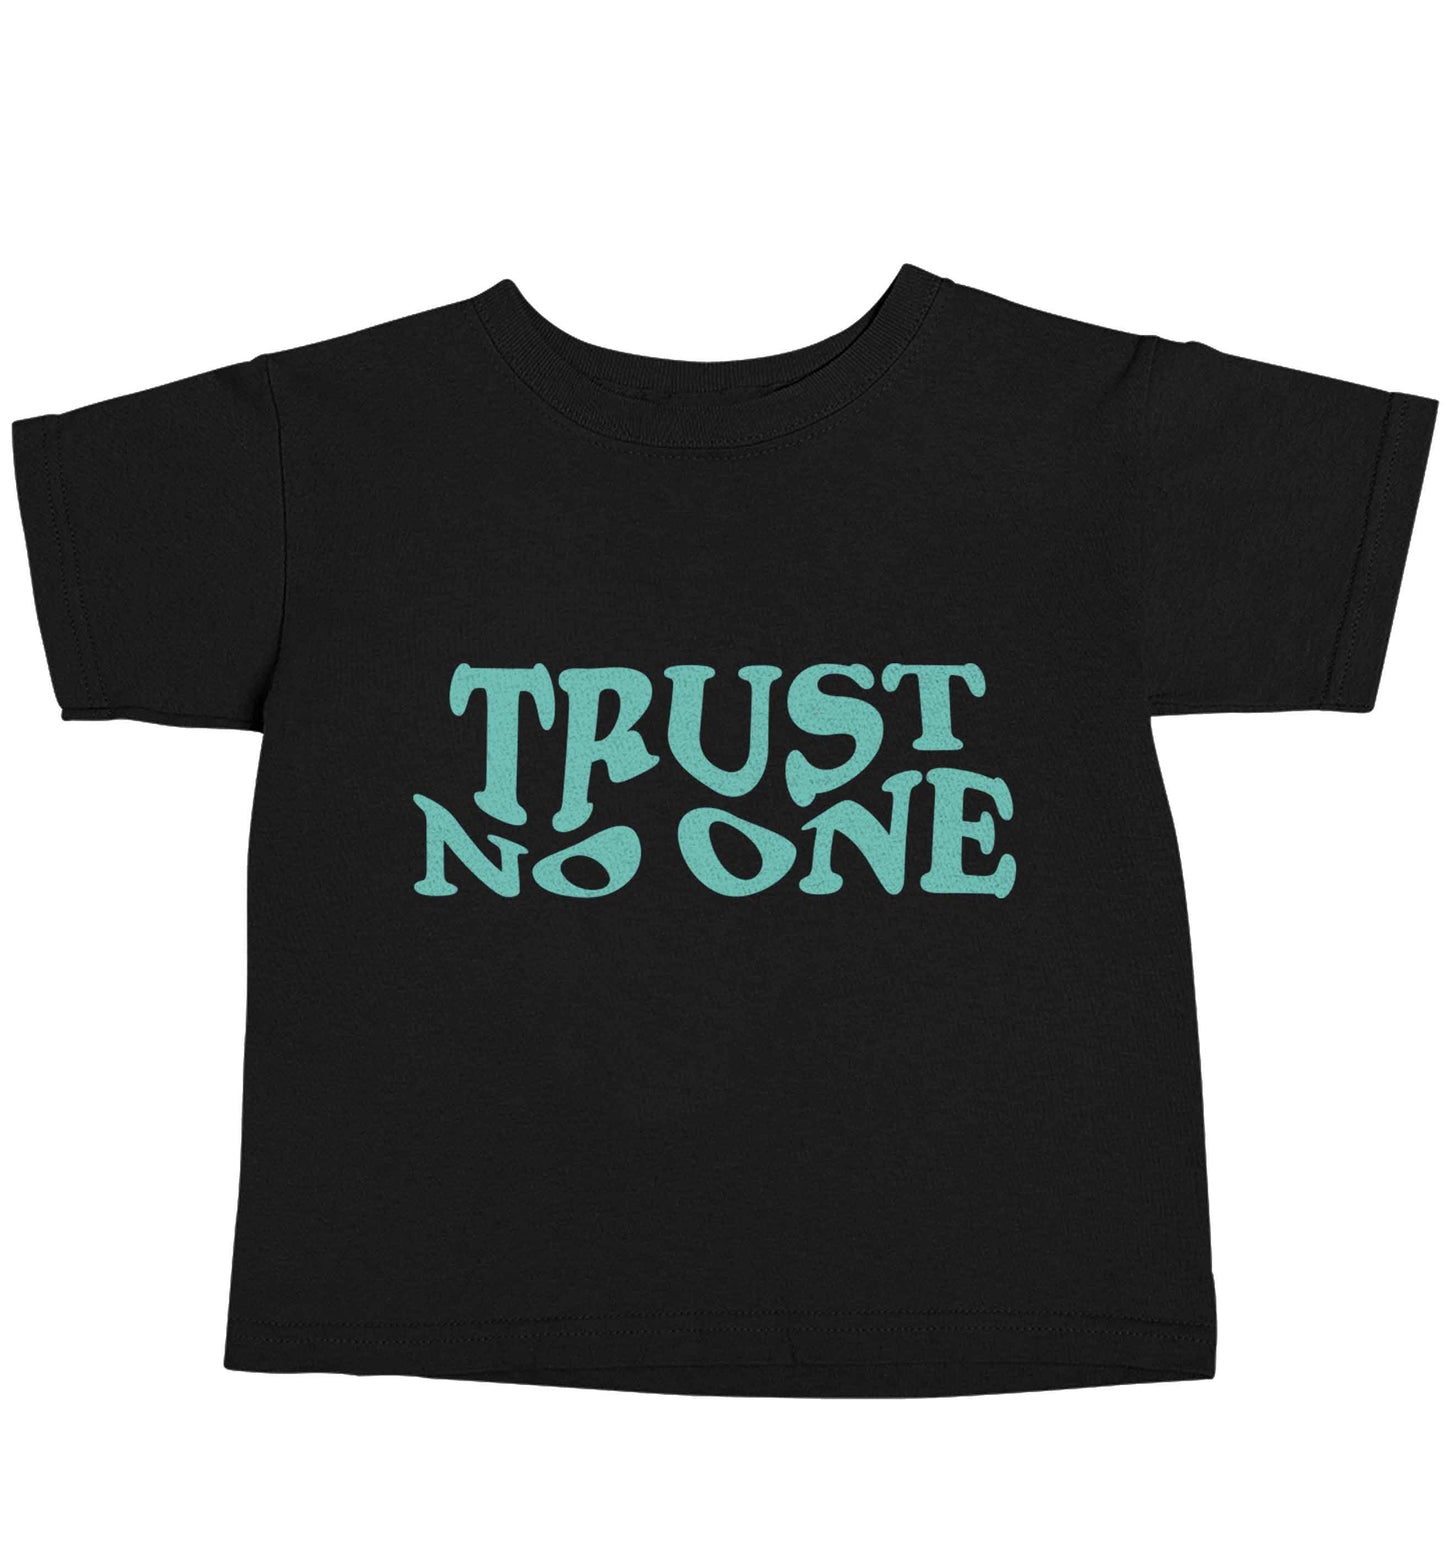 Trust no one Black baby toddler Tshirt 2 years